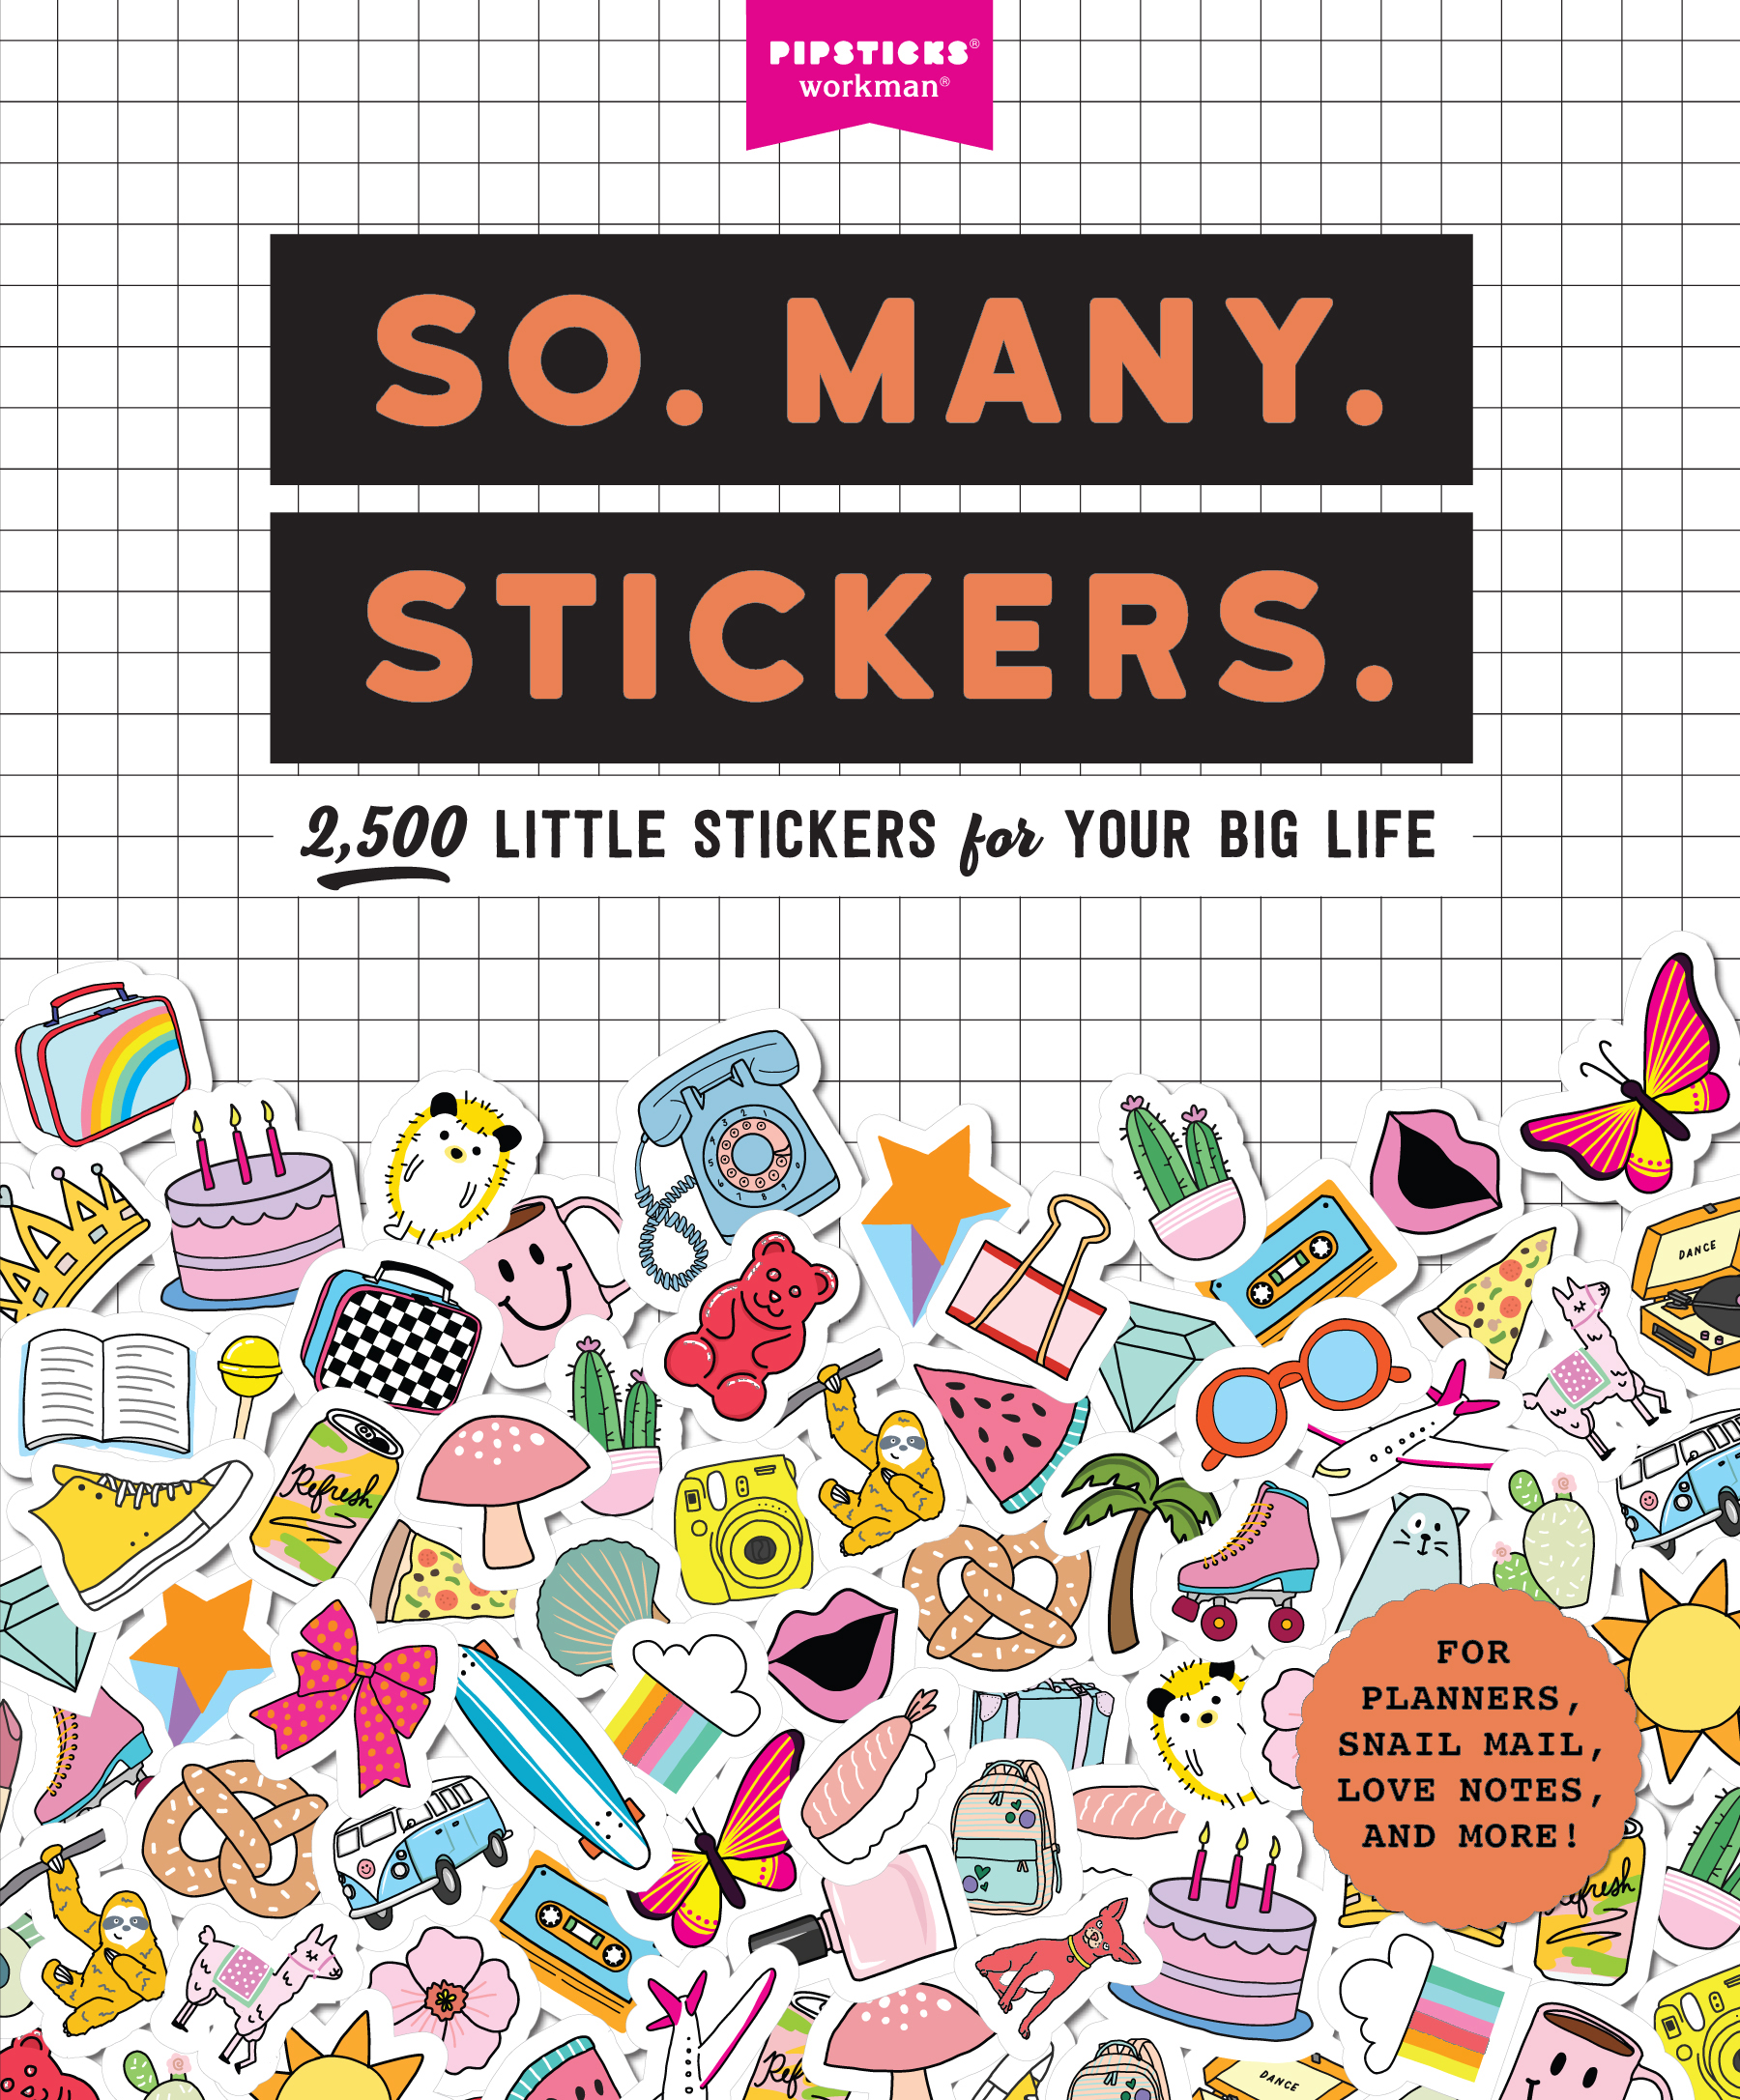 So. Many. Stickers. by Pipsticks®+Workman®